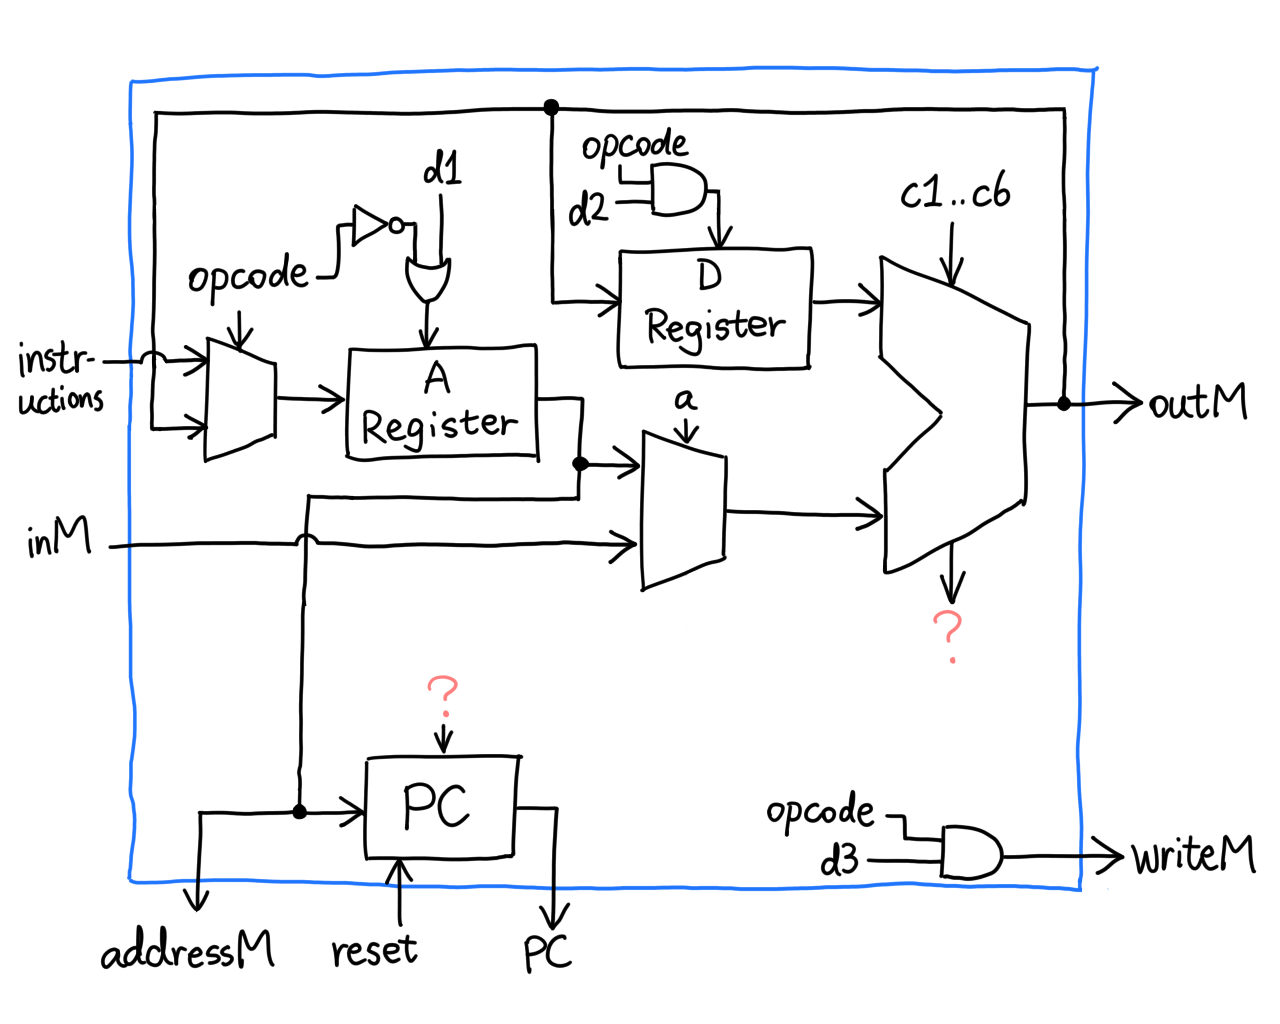 CPU with correct logic controls at d1, d2, and d3